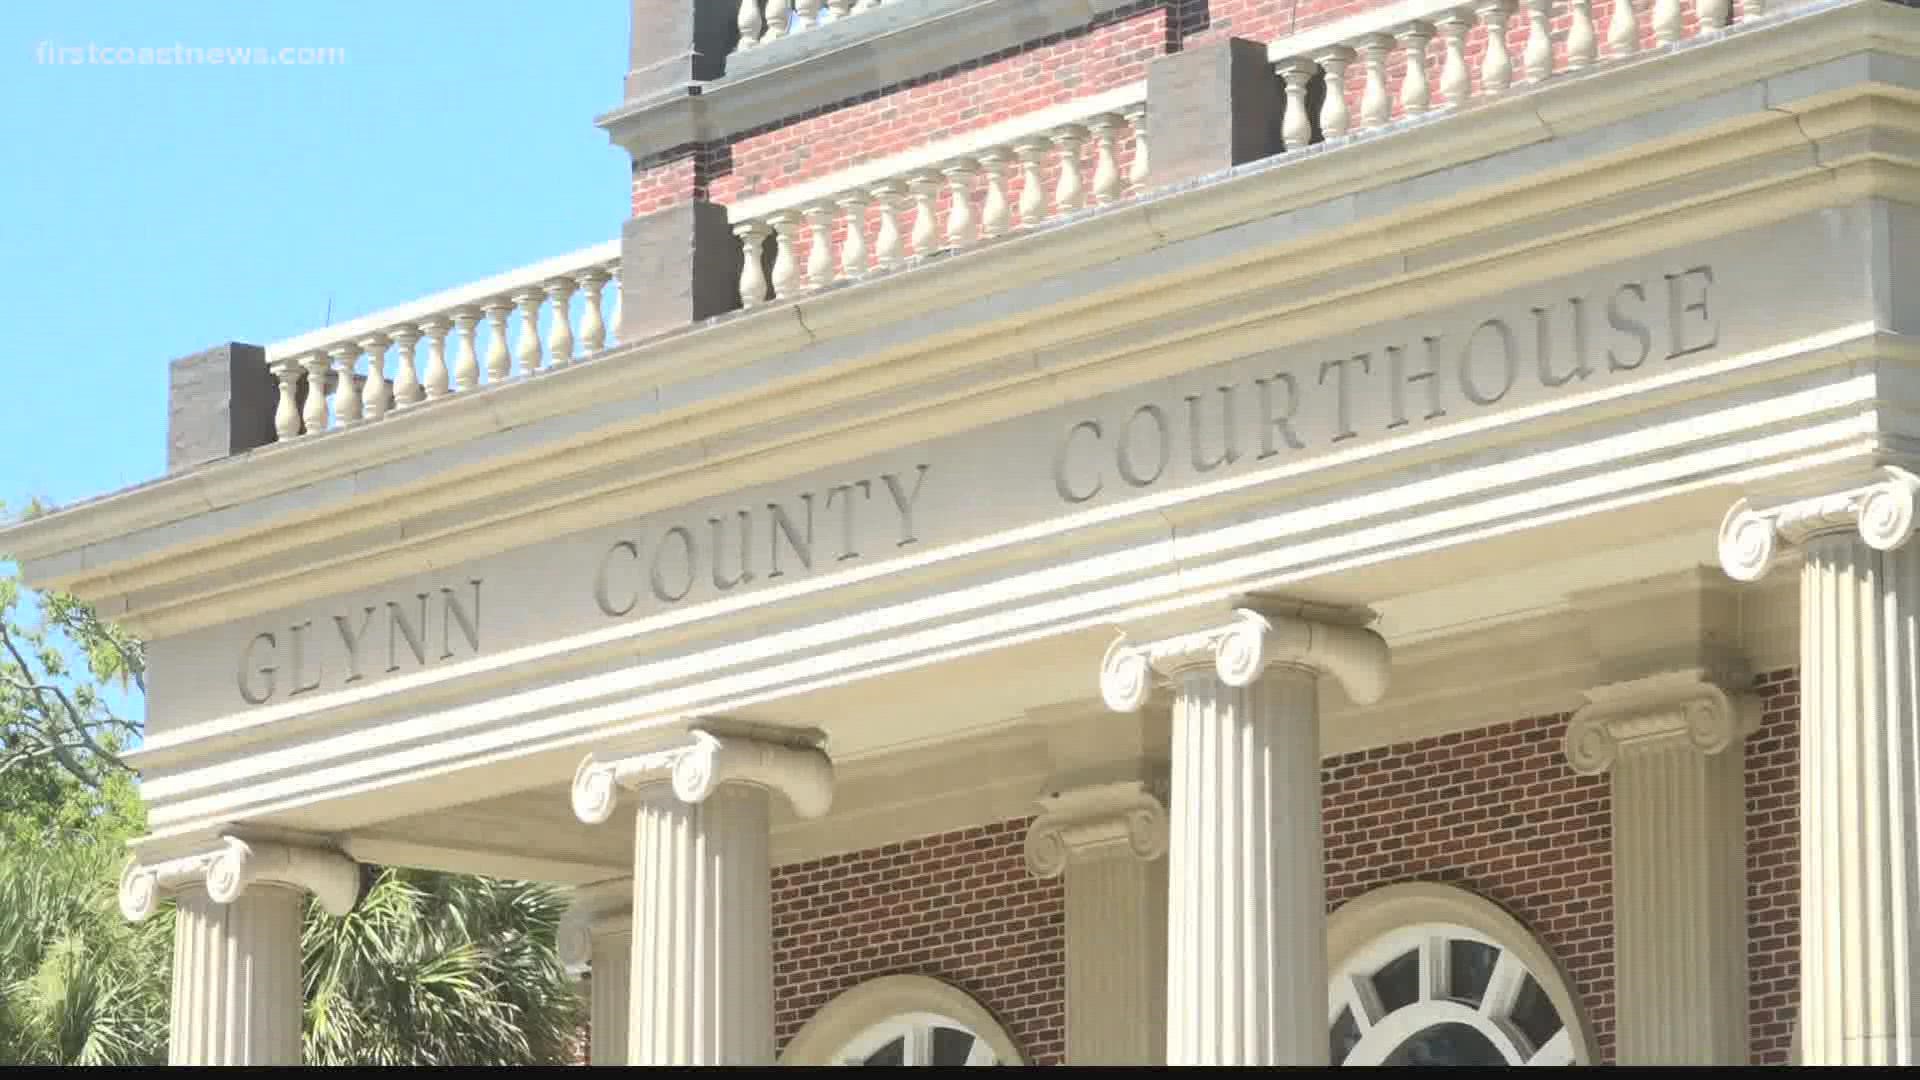 Eviction hearings begin in Glynn County firstcoastnews com